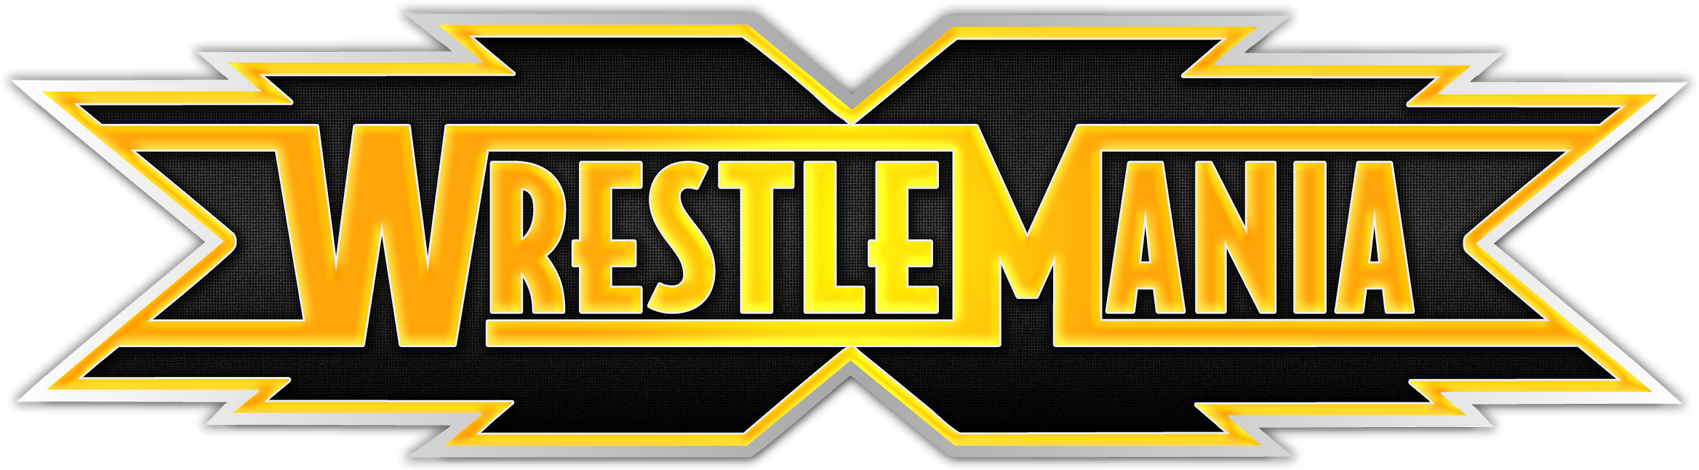 Logo NXT Wrestlemania by IamRockenbach on DeviantArt.